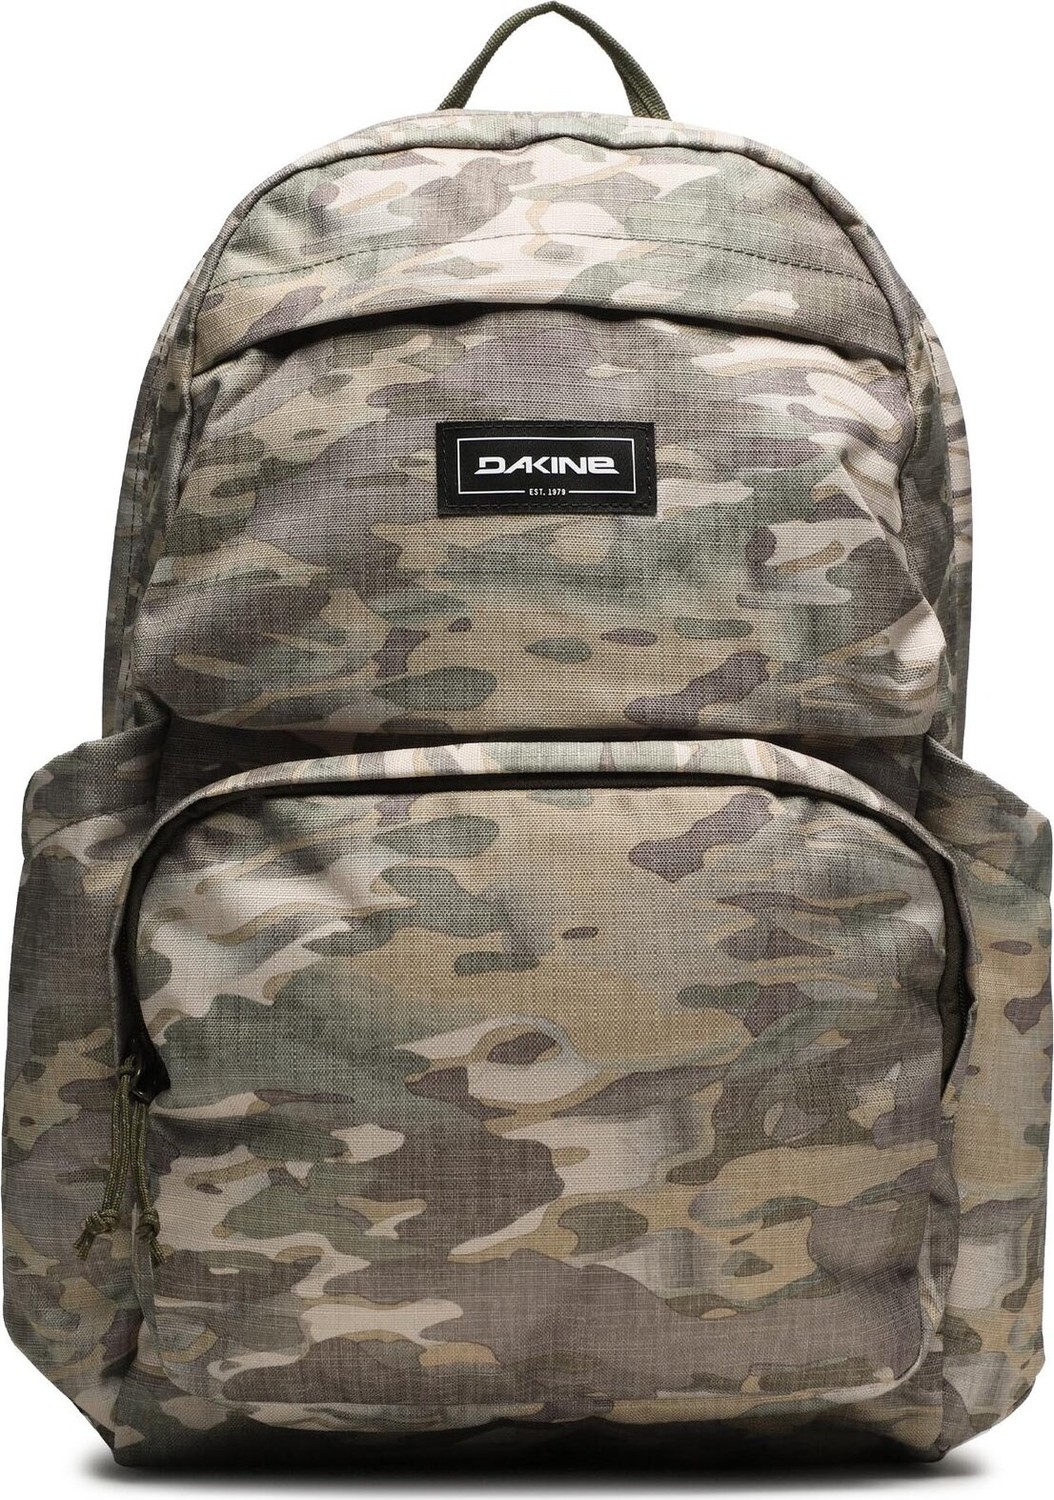 Batoh Dakine Method Backpack 10004001 Vintage Camo 923